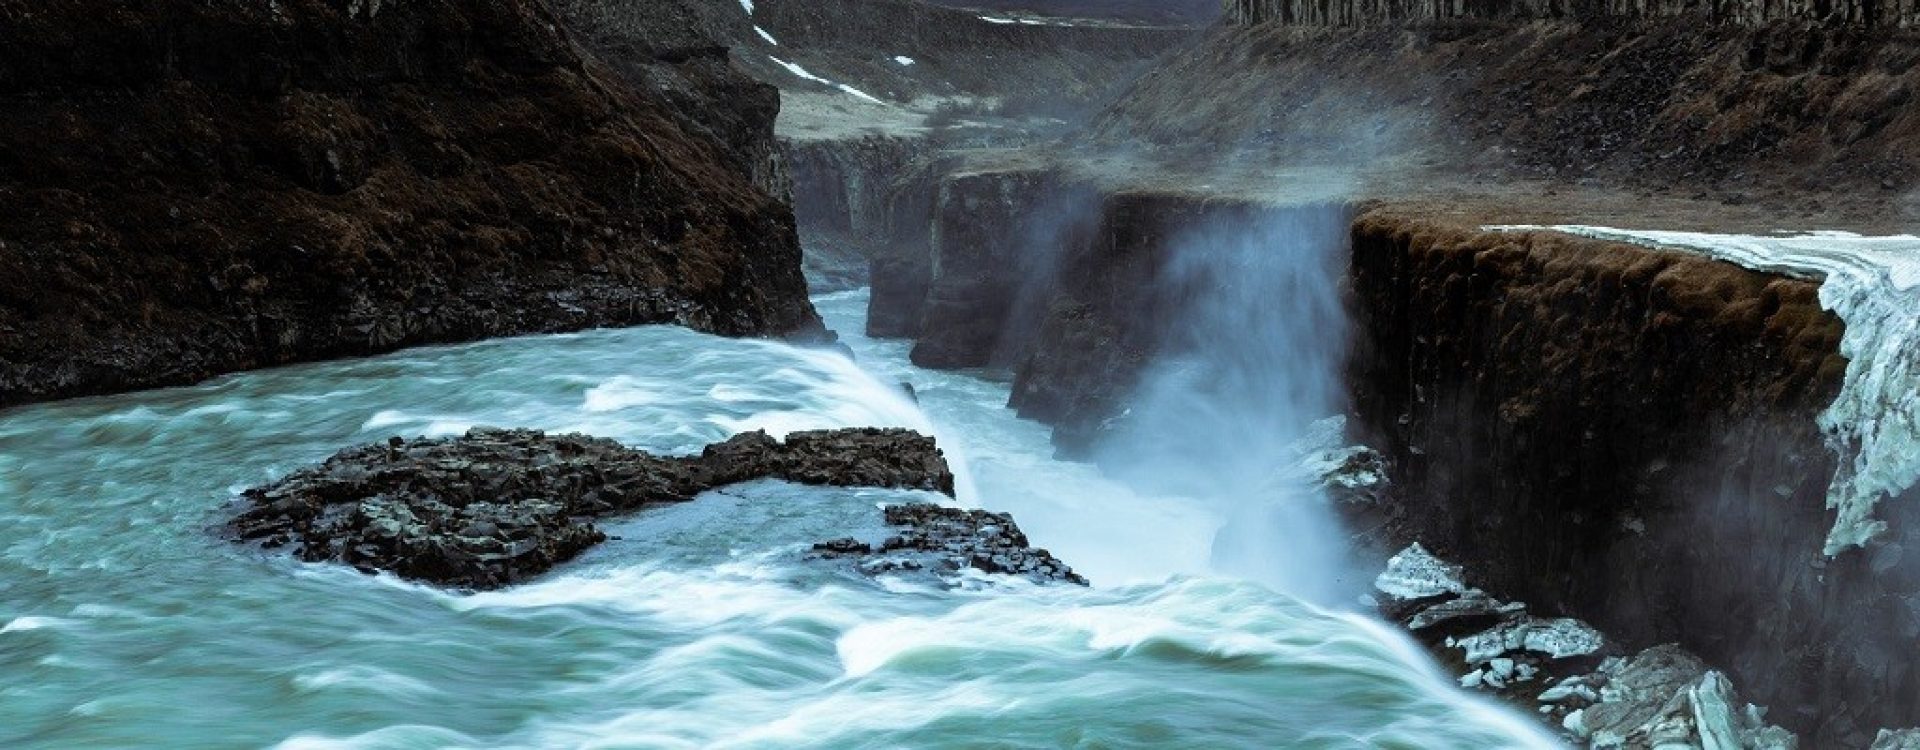 Gullfoss - prekrasan prizor vodopada na Islandu